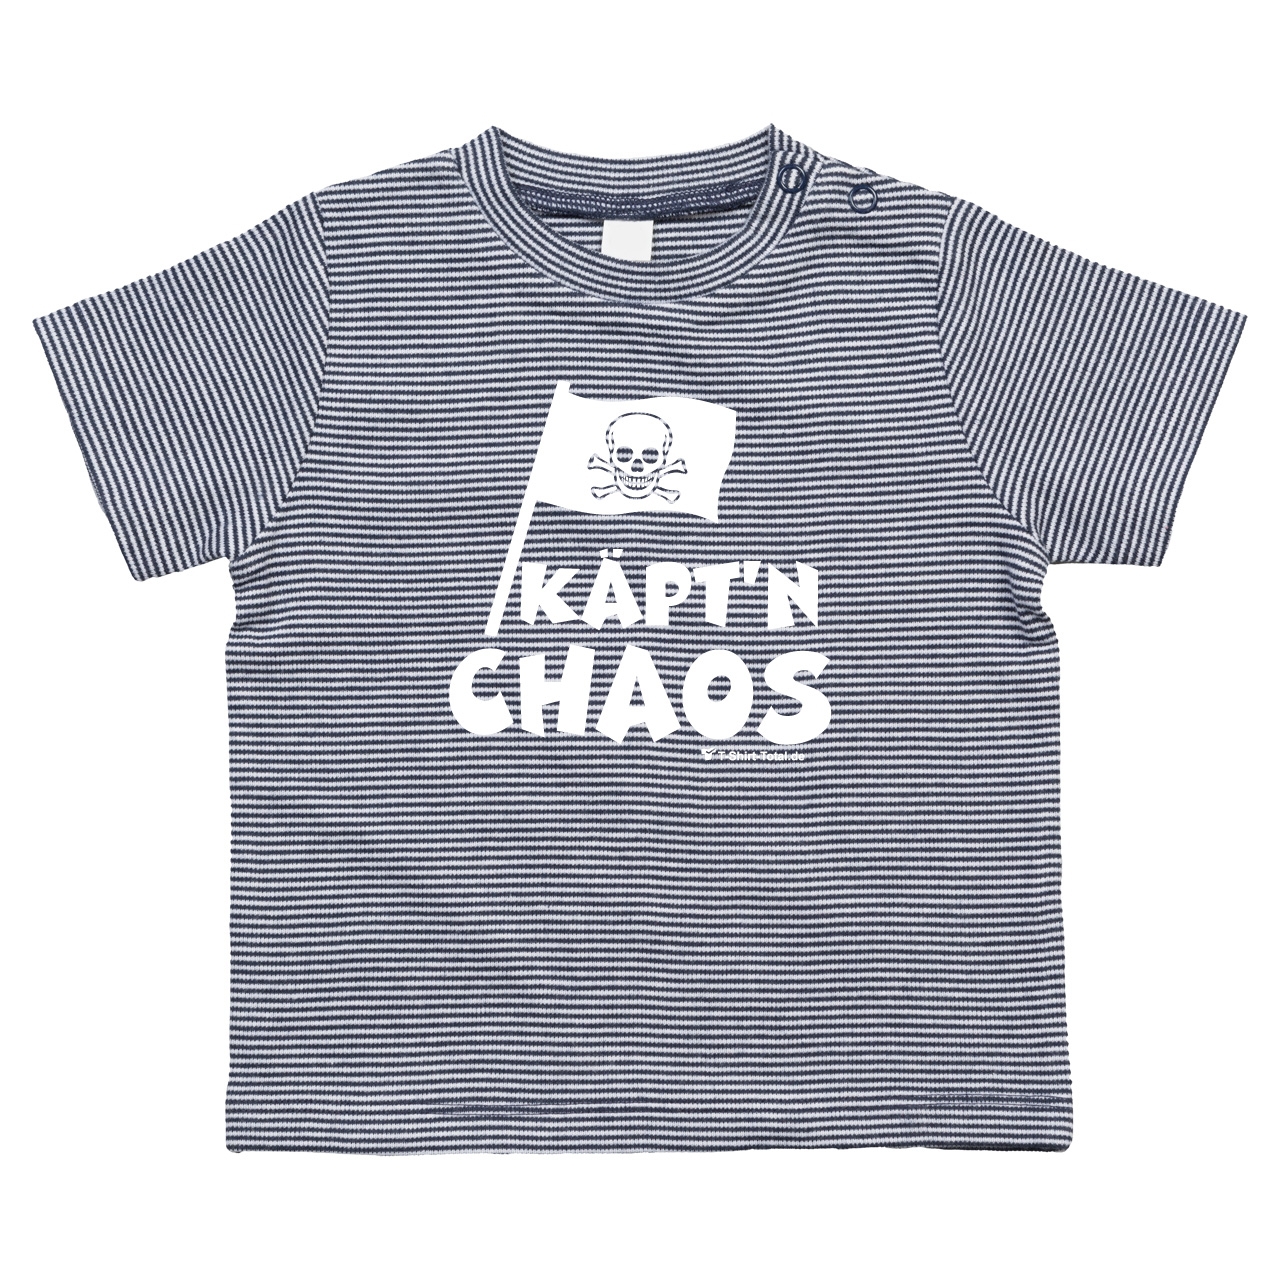 Käptn Chaos Bio Kinder T-Shirt gestreift navy / weiß 12-18 Monate